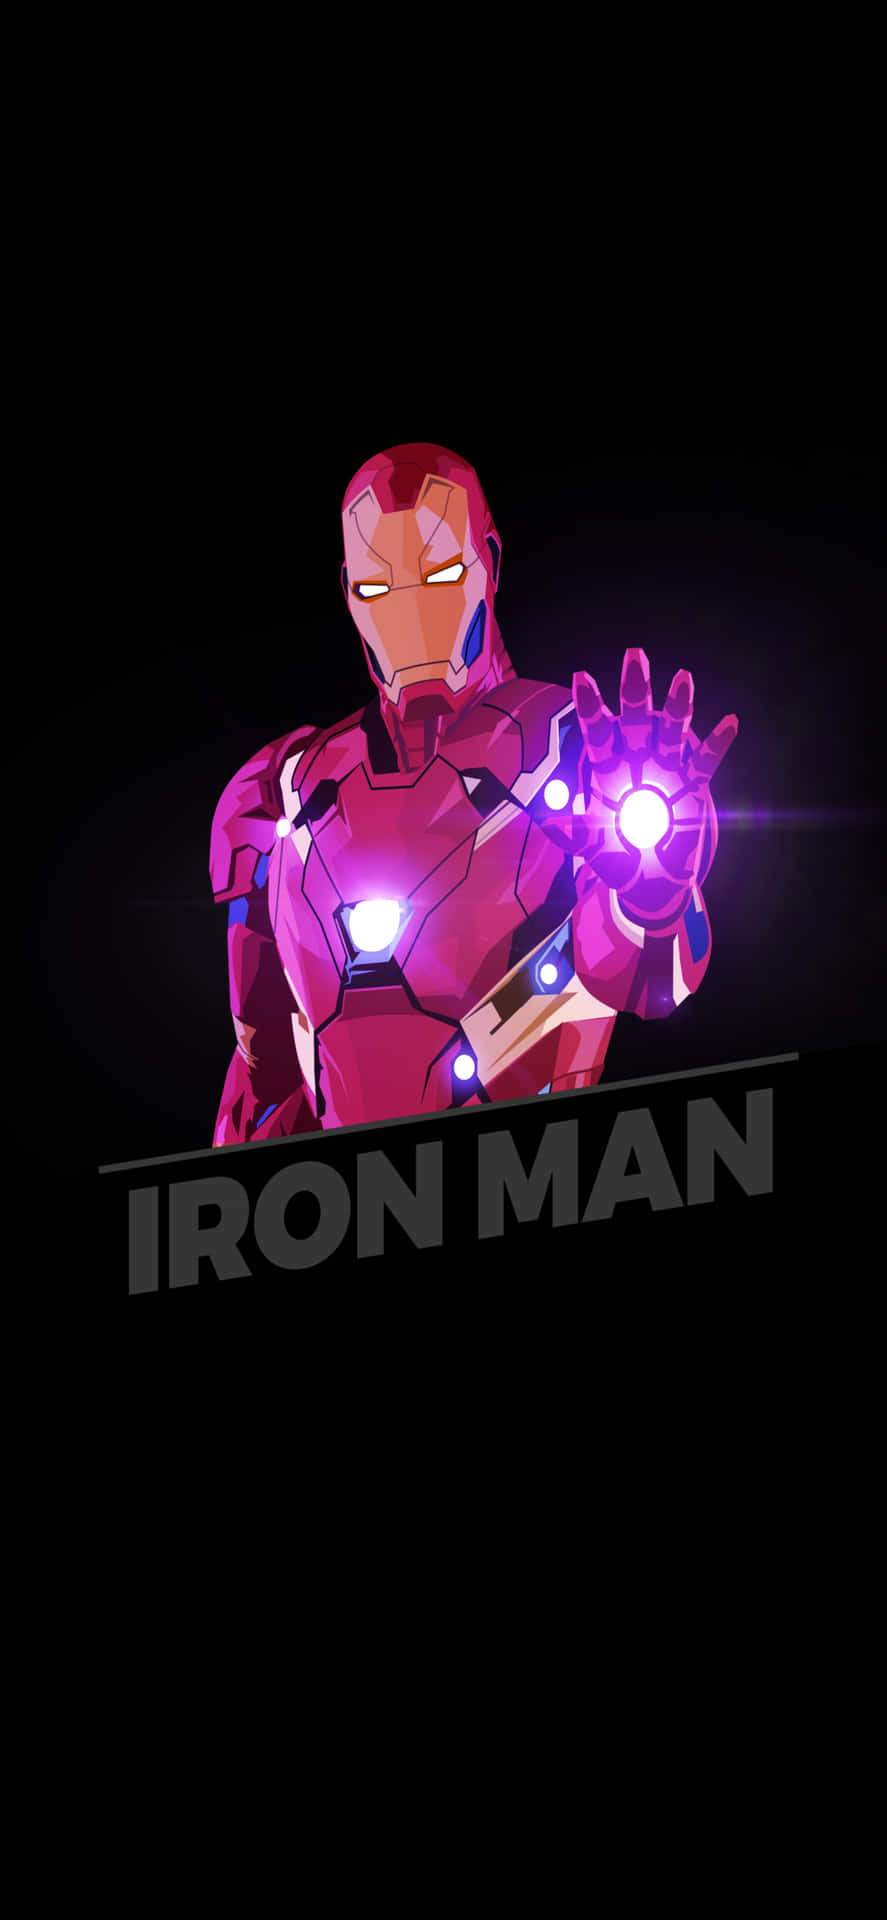 Sfondoiphone X Iron Man Luce Viola Iron Man